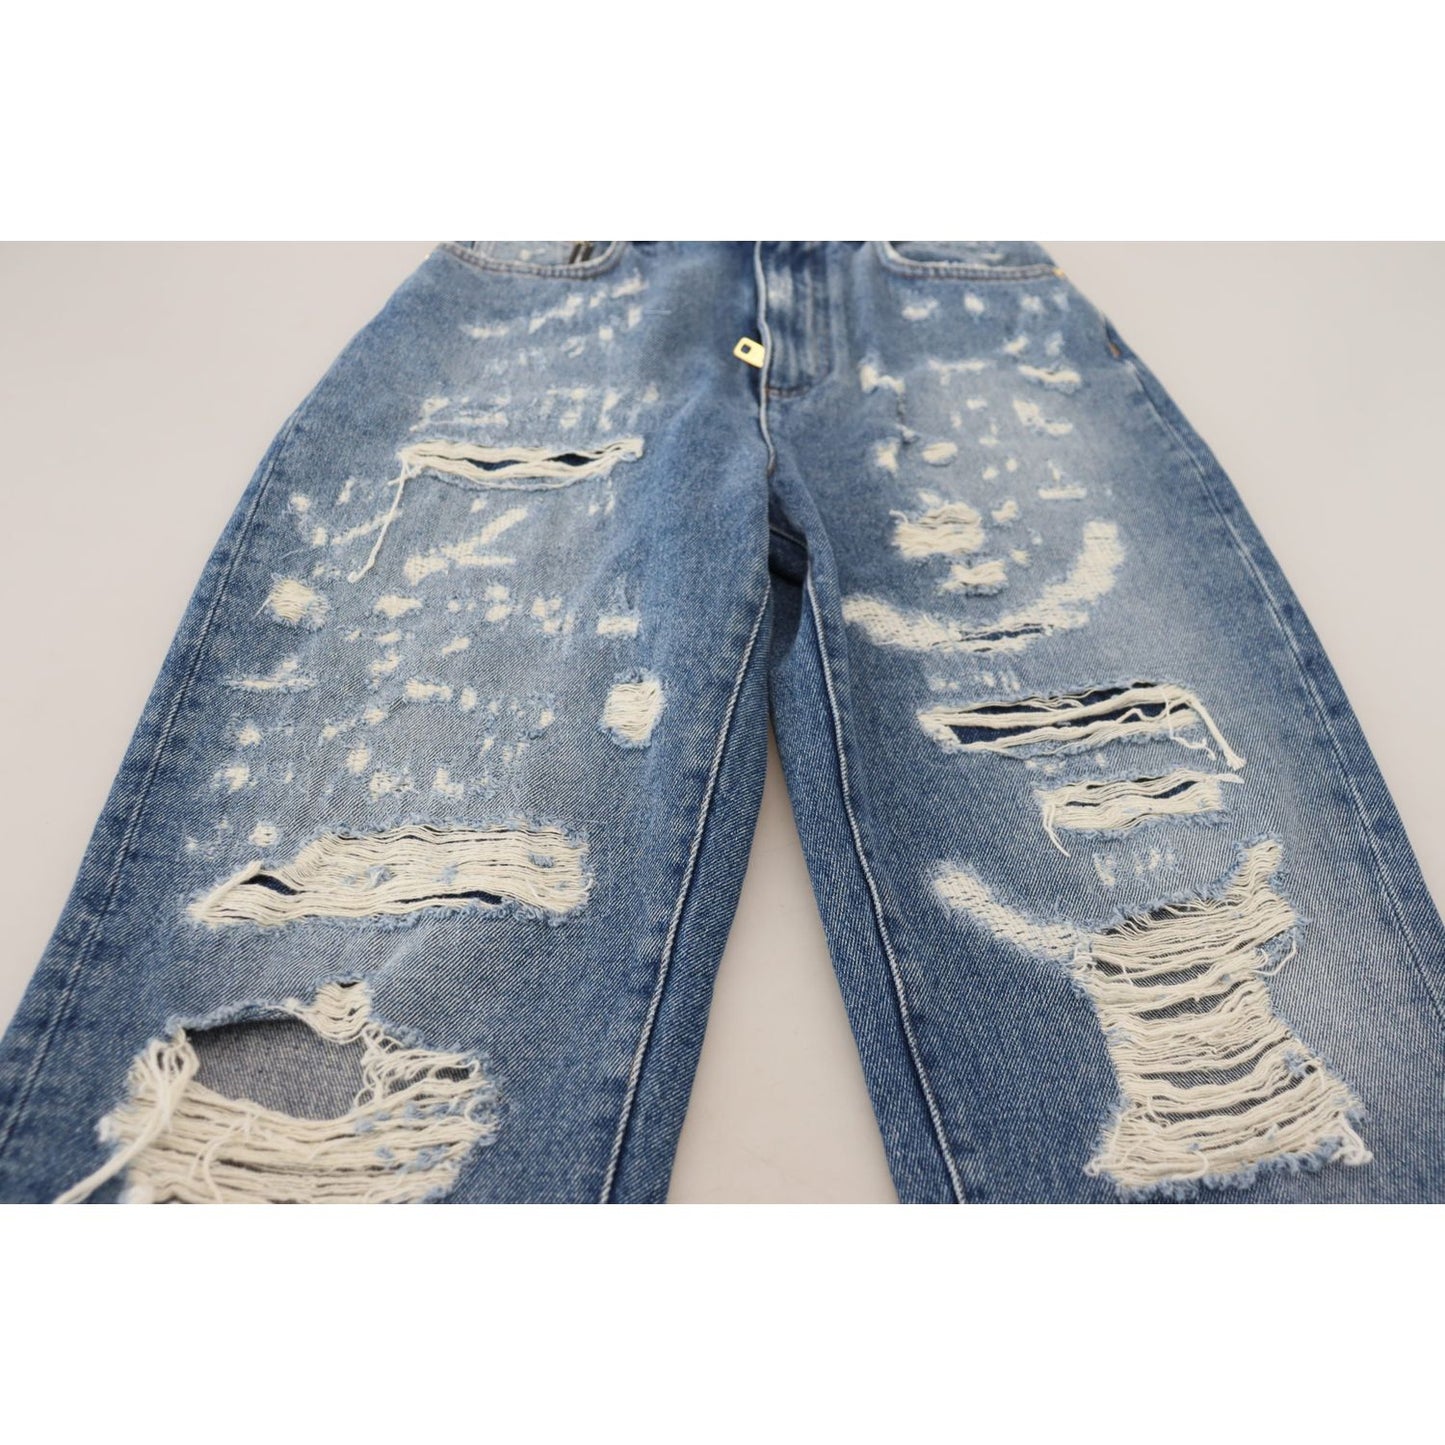 Dolce & Gabbana Chic Tattered Denim Pants - Indigo Essence blue-washed-cotton-tattered-denim-jeans-1